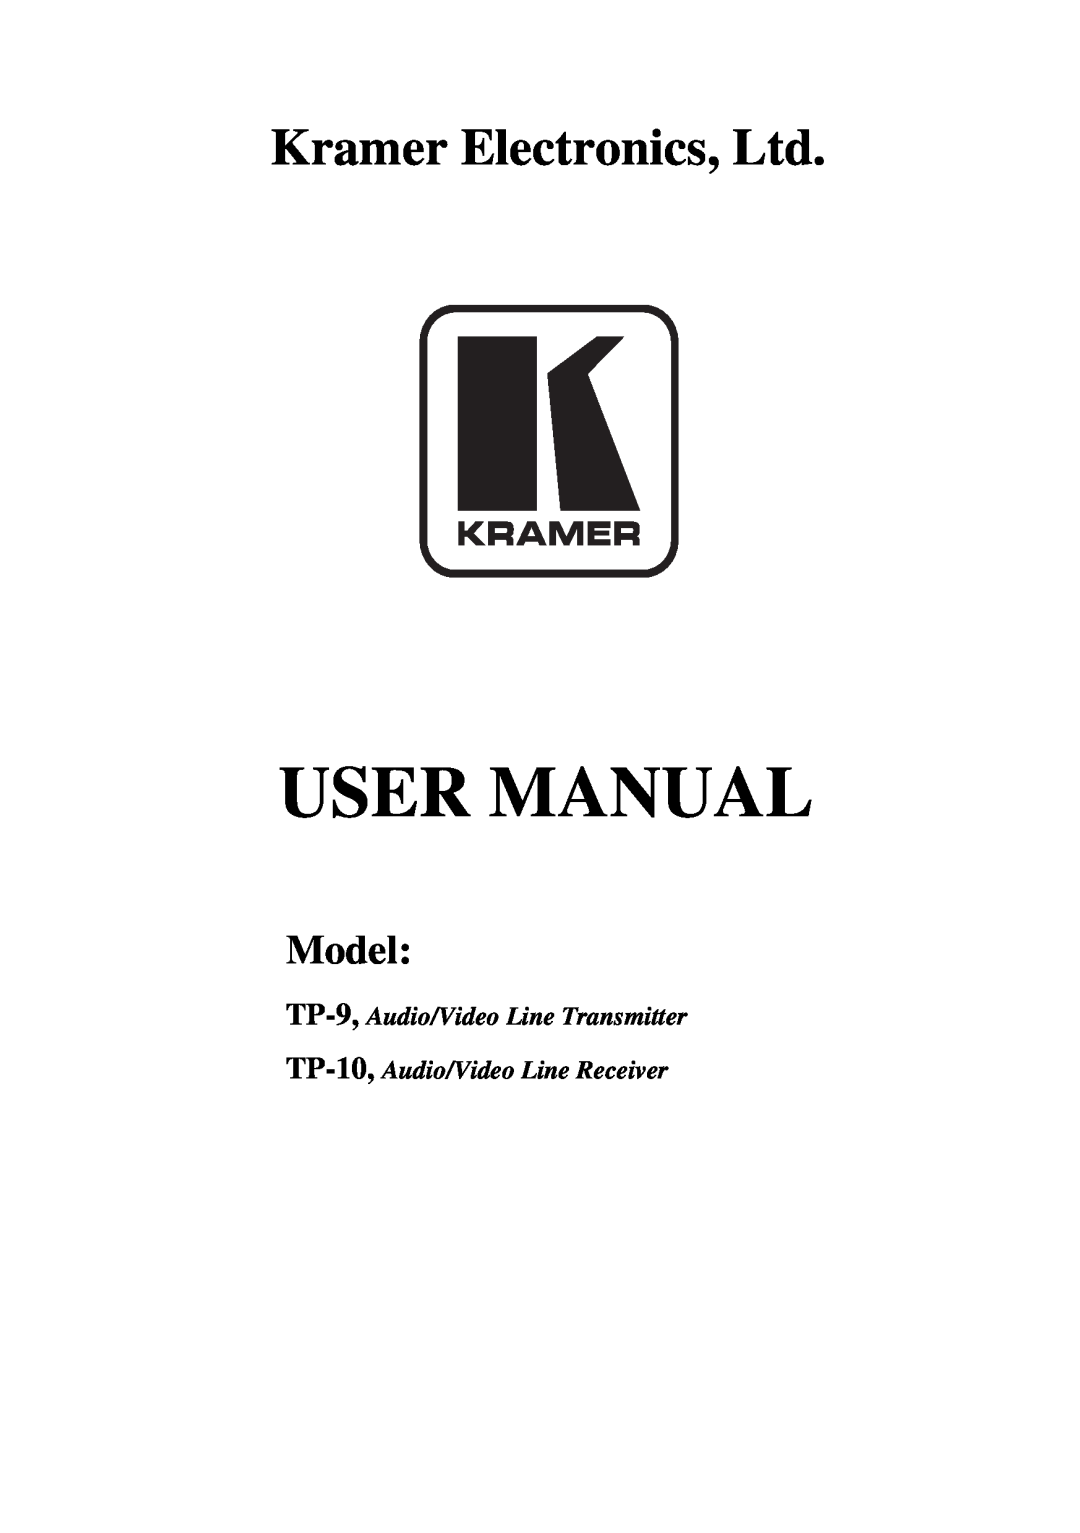 Kramer Electronics TP-9 user manual User Manual, Model 